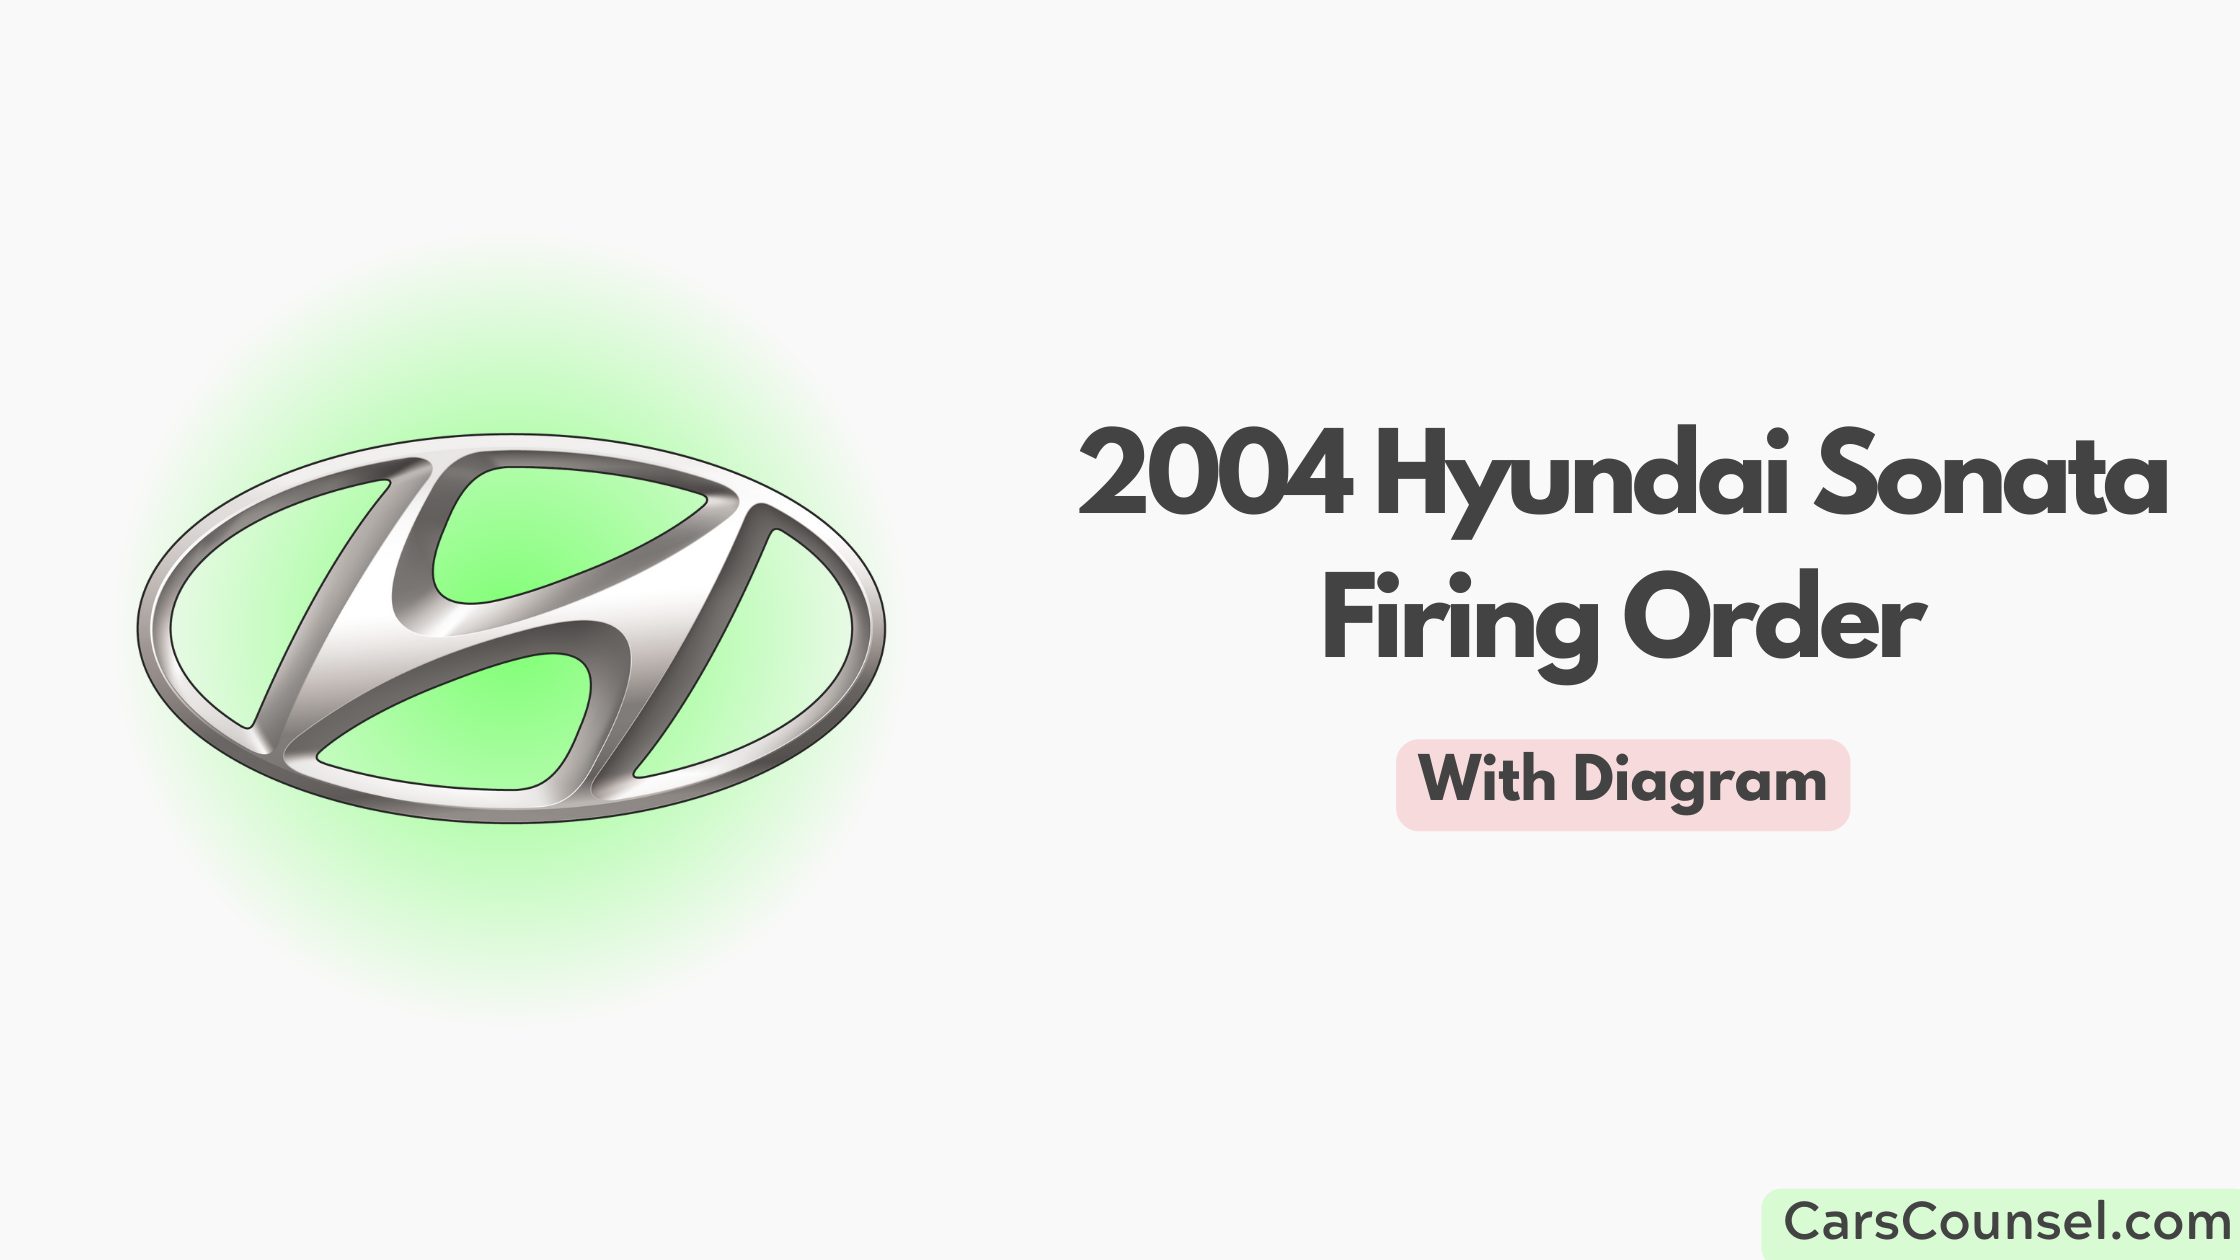 2004 Hyundai Sonata Firing Order With Diagram